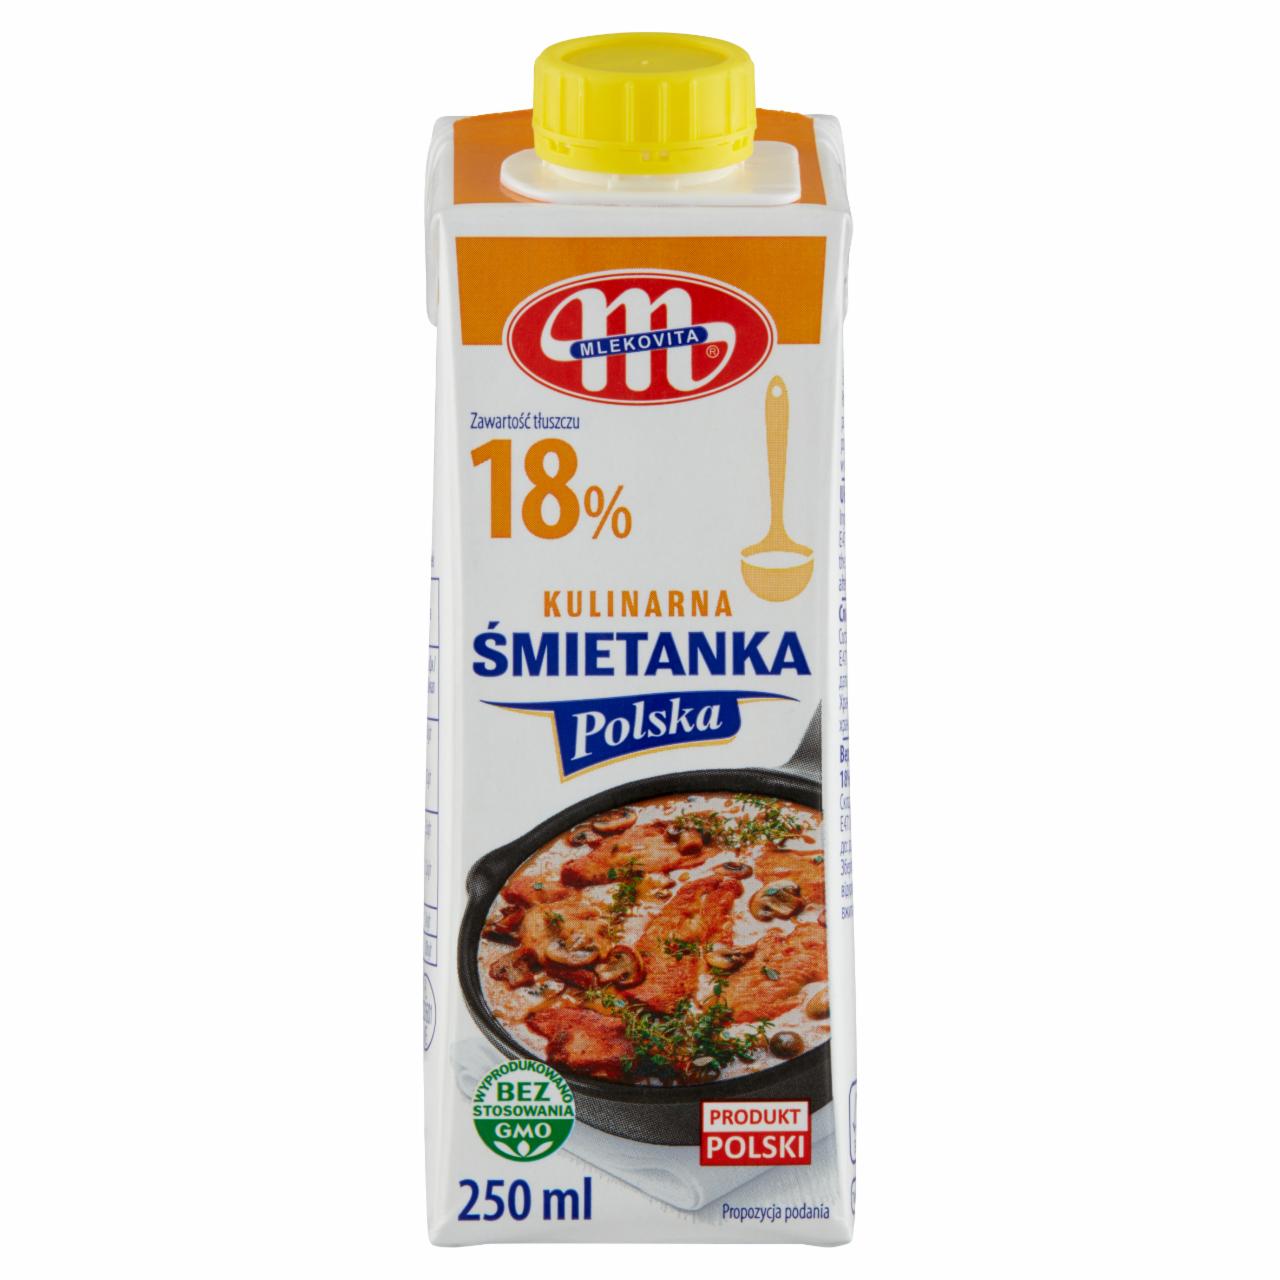 Zdjęcia - Mlekovita Śmietanka Polska kulinarna 18% 250 ml